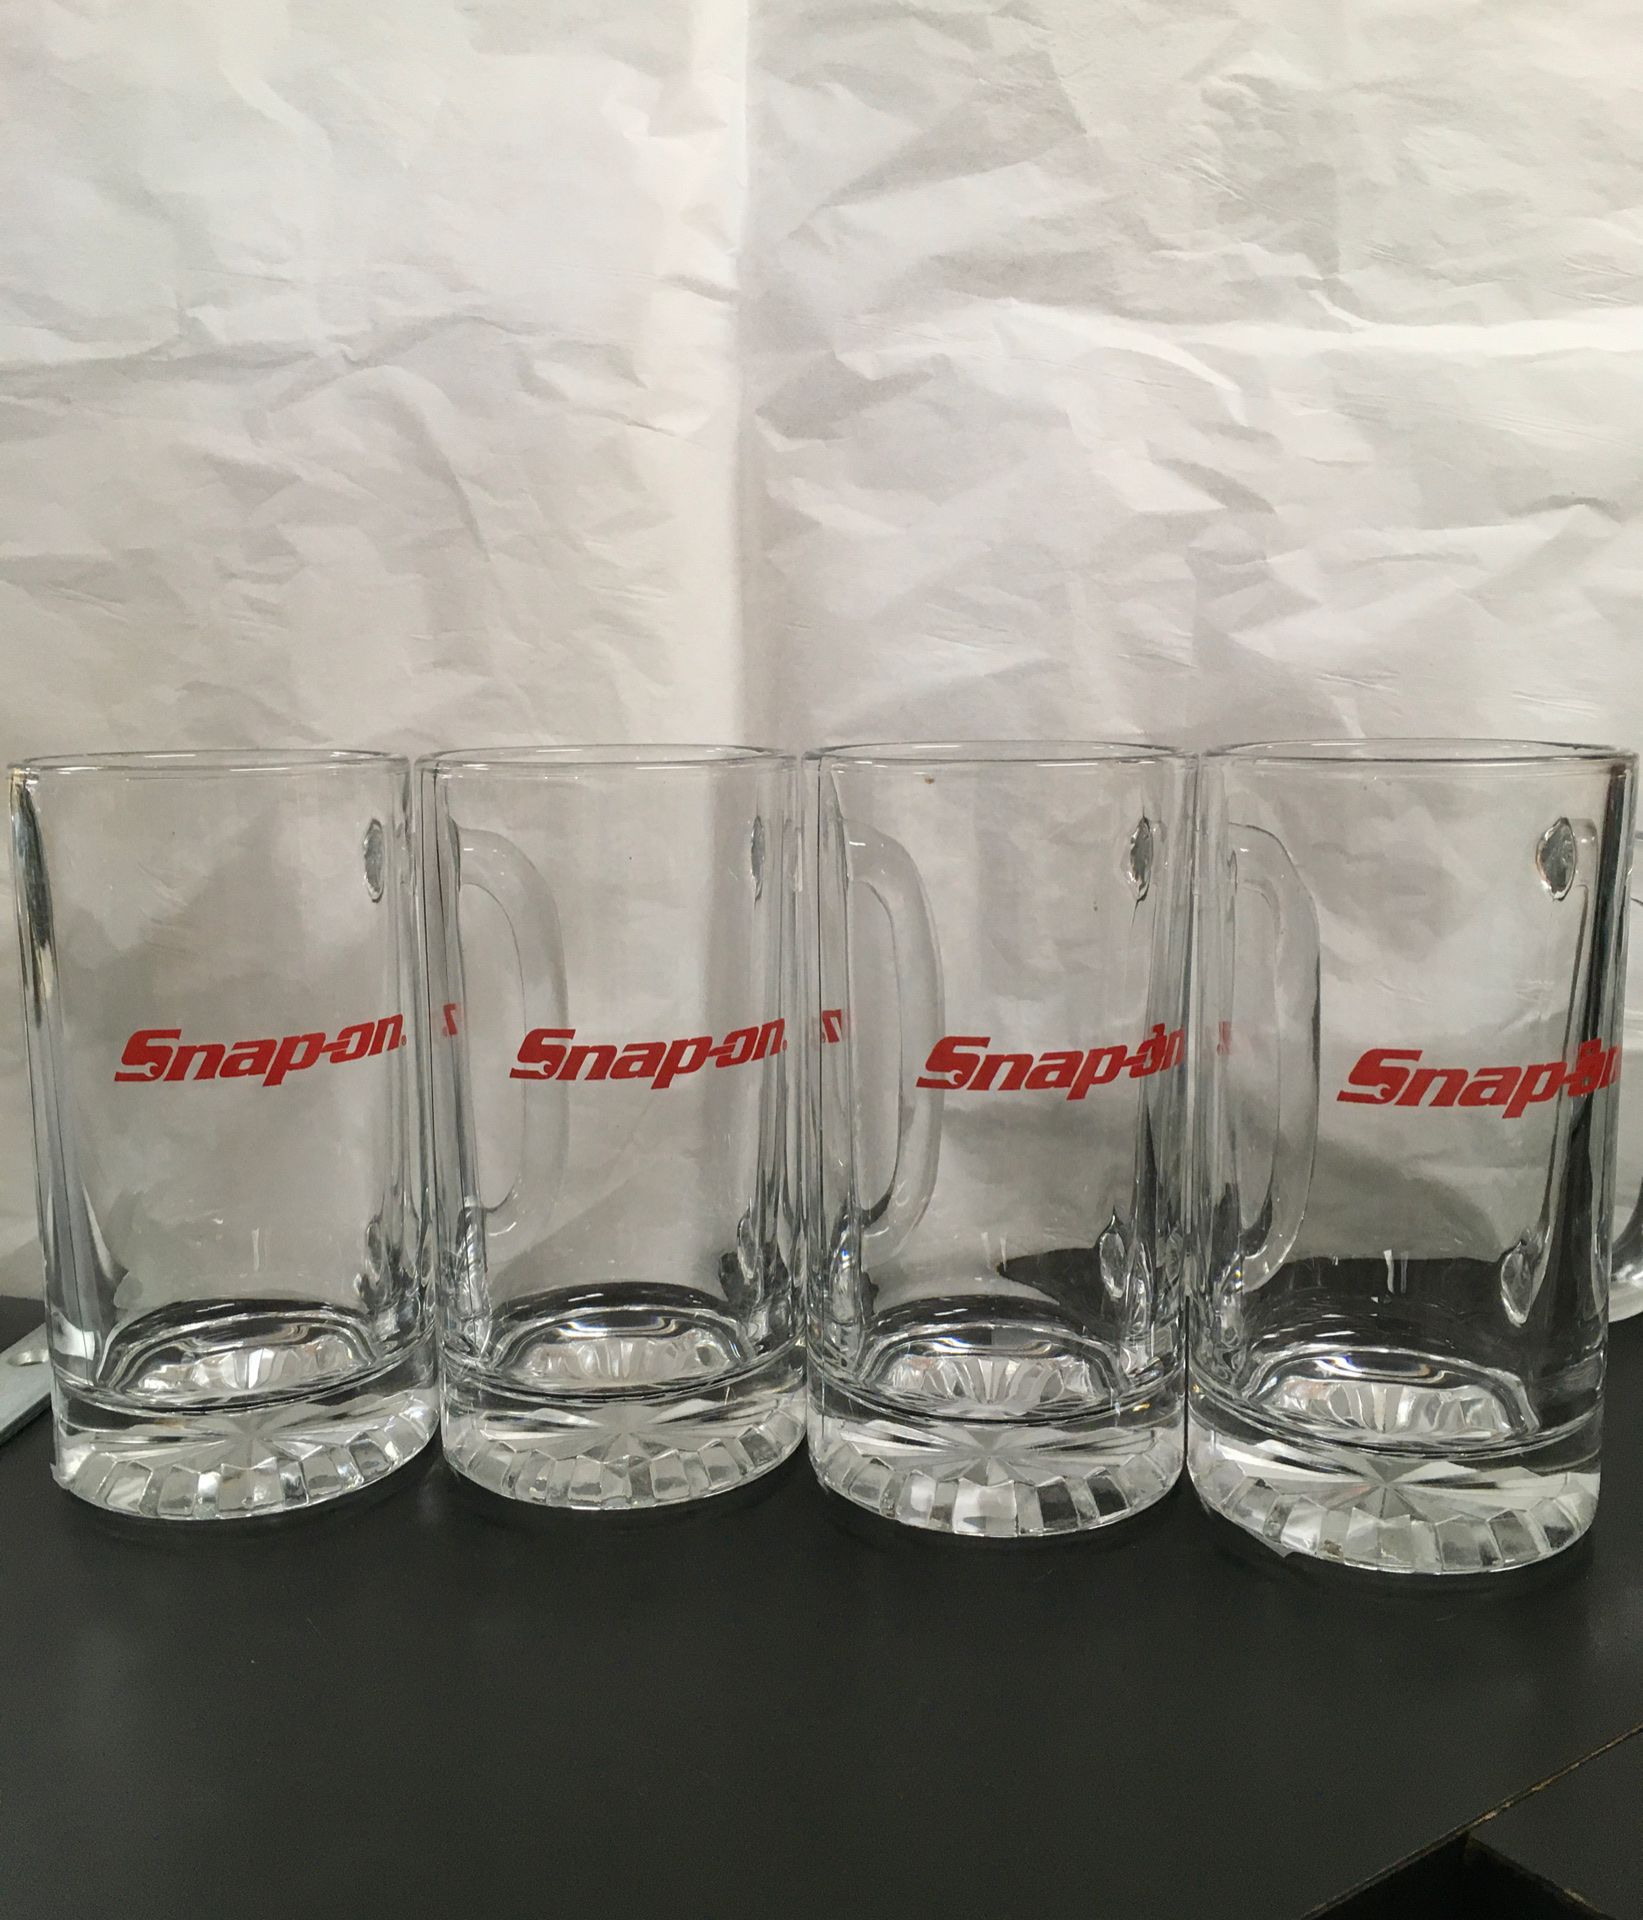 Snap-on glassware